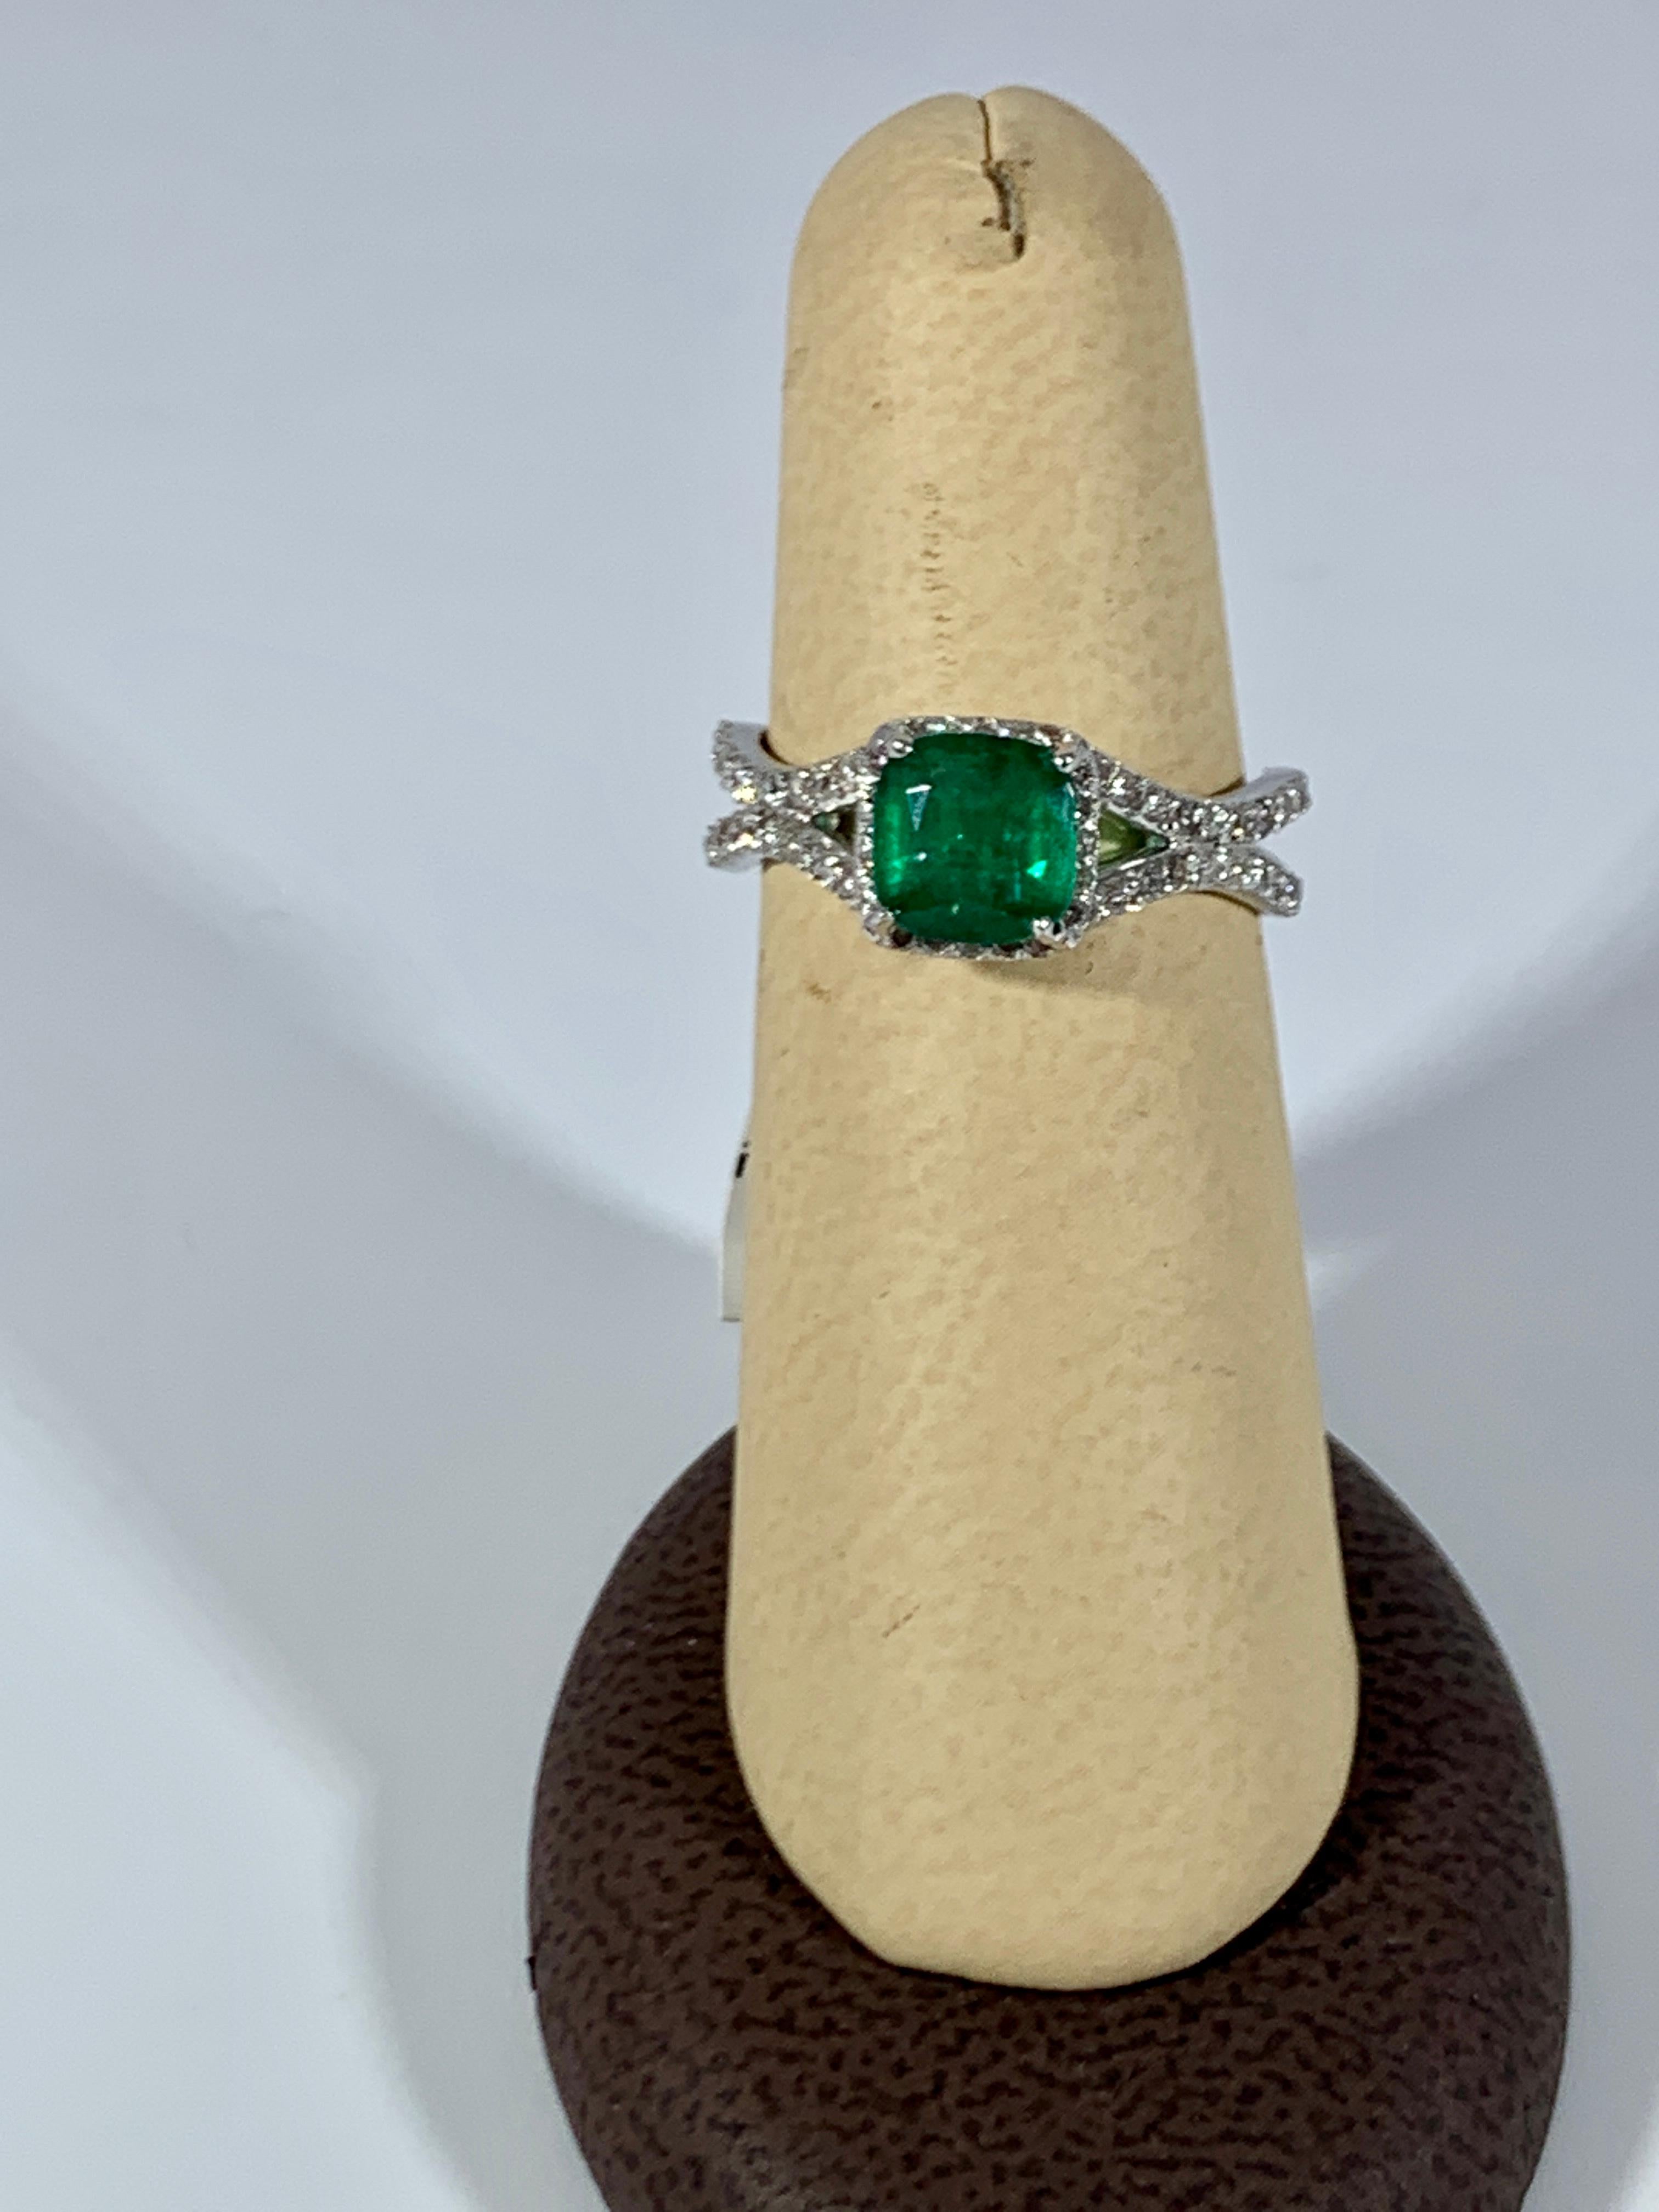 1.3 Carat Cushion Cut Emerald and 1.2 Carat Diamond Ring 14 Karat White Gold For Sale 2